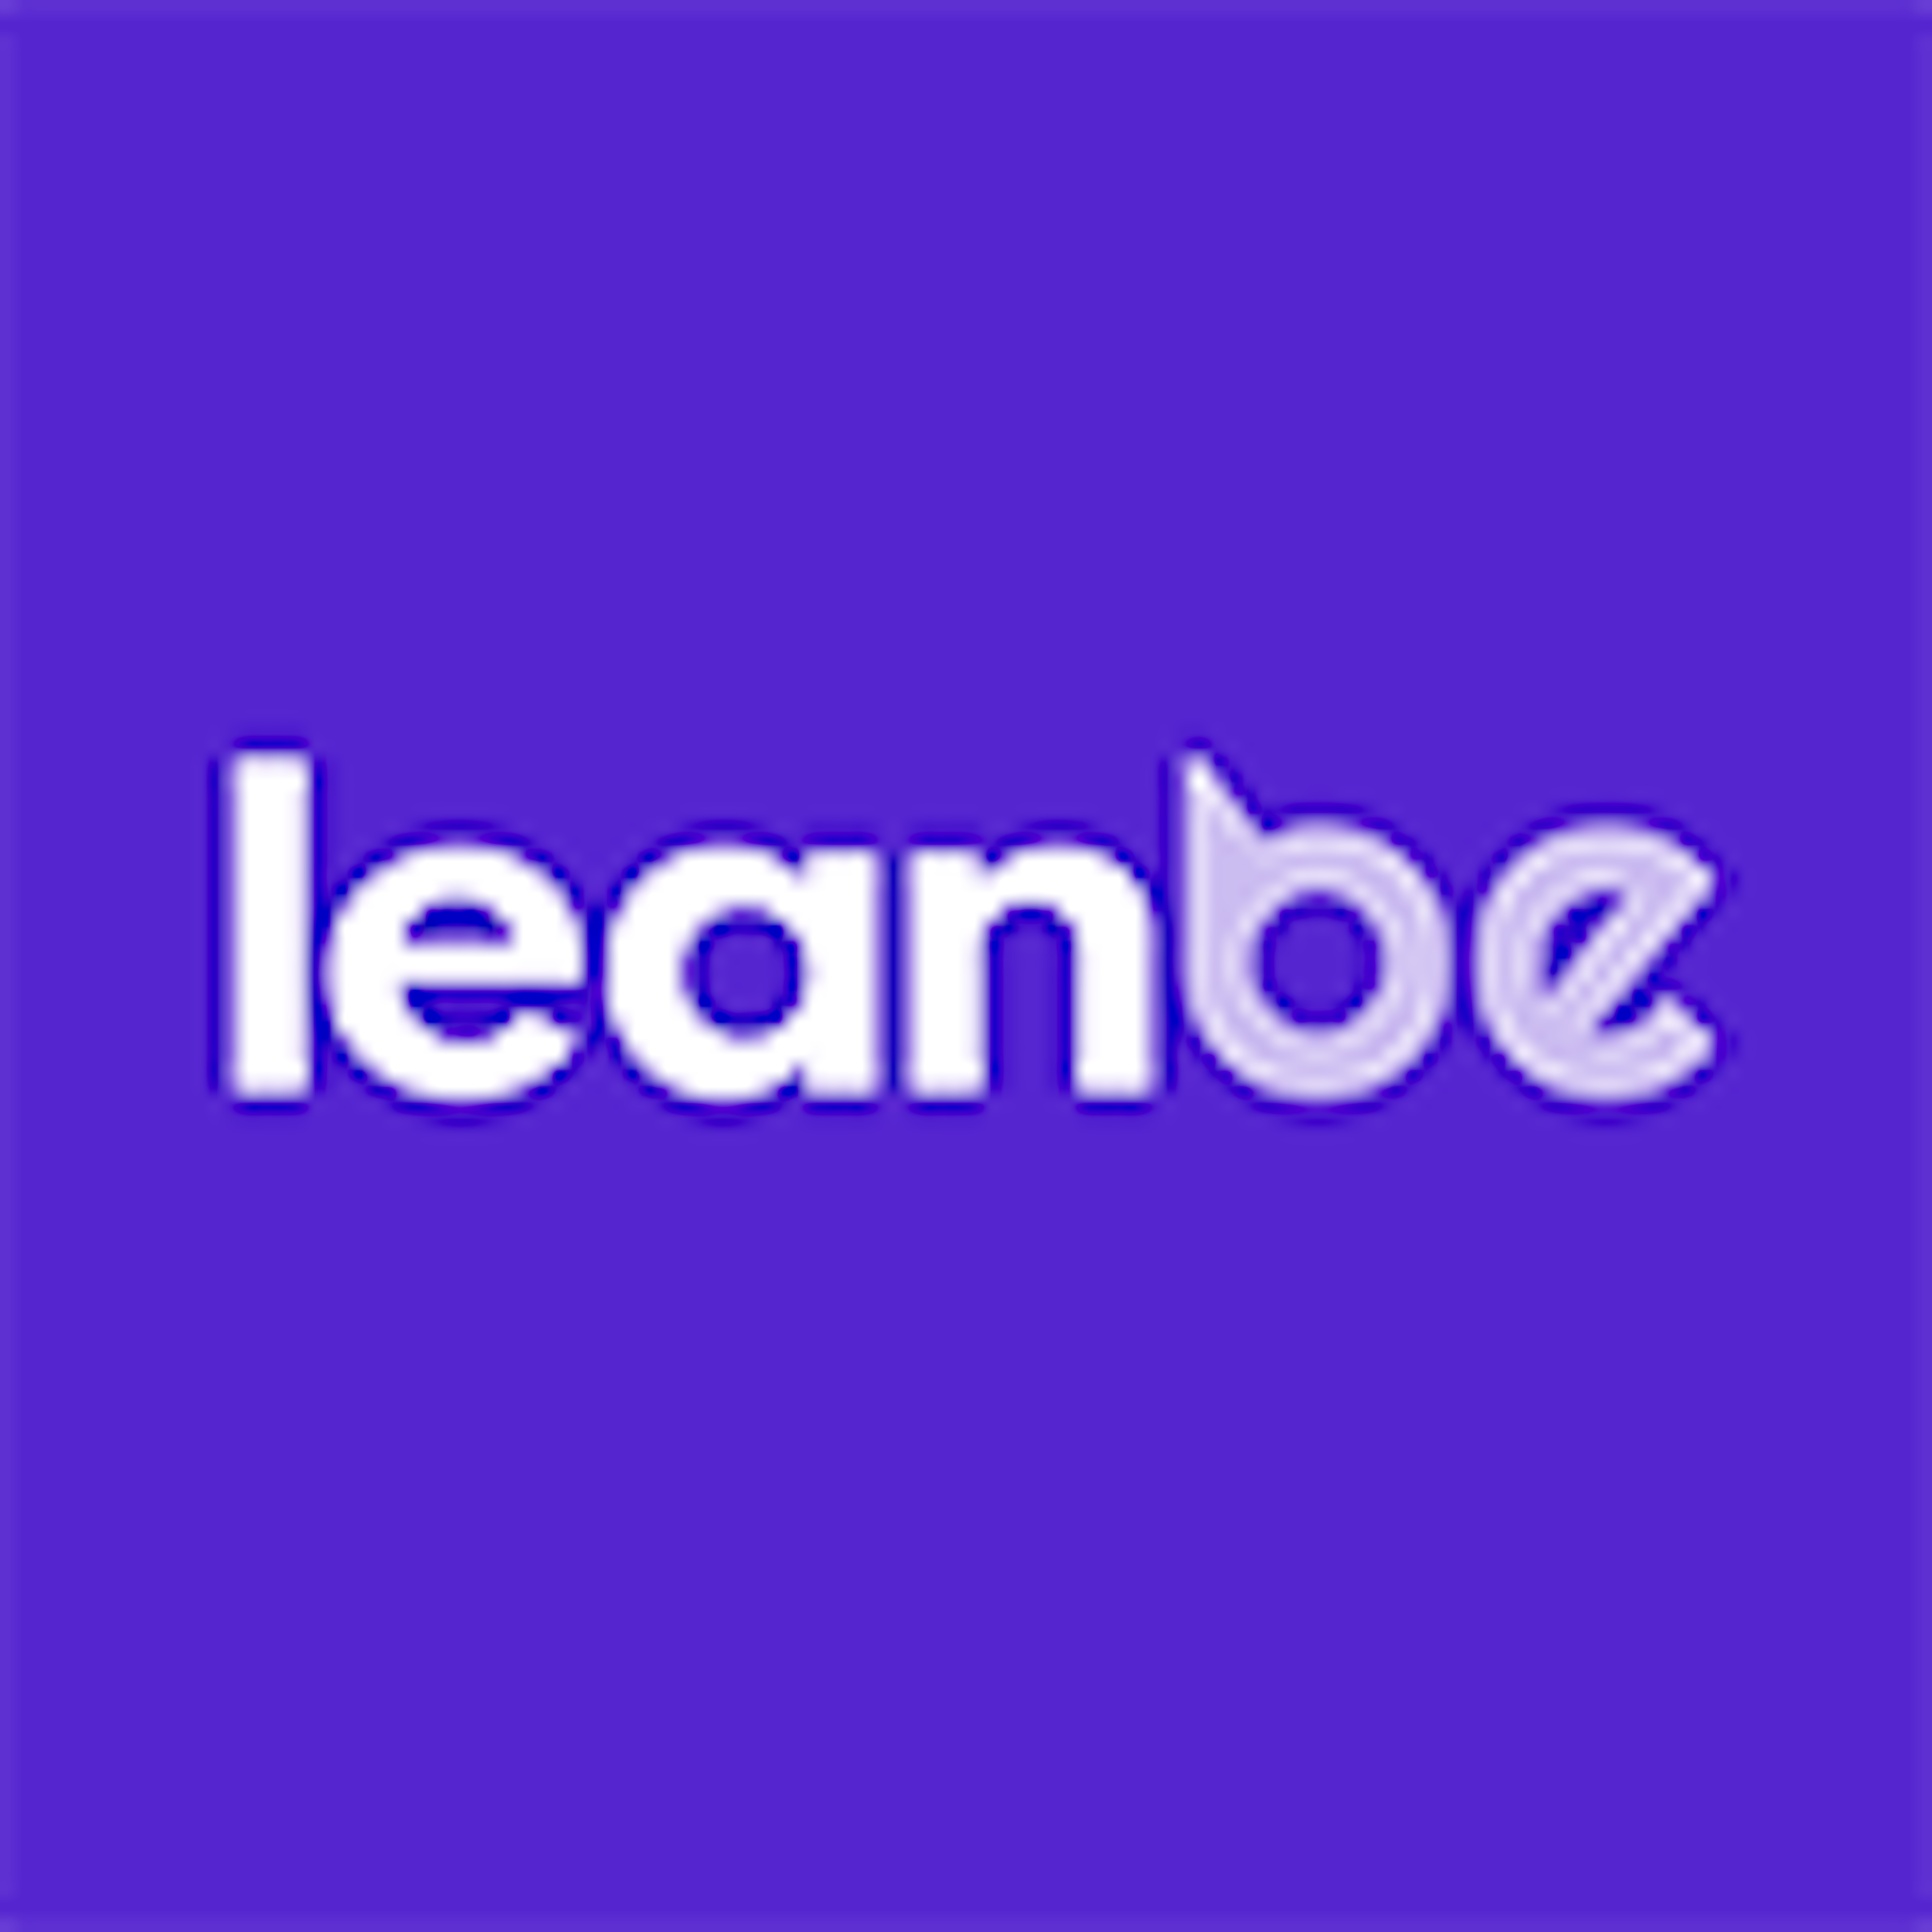 Leanbe Logo